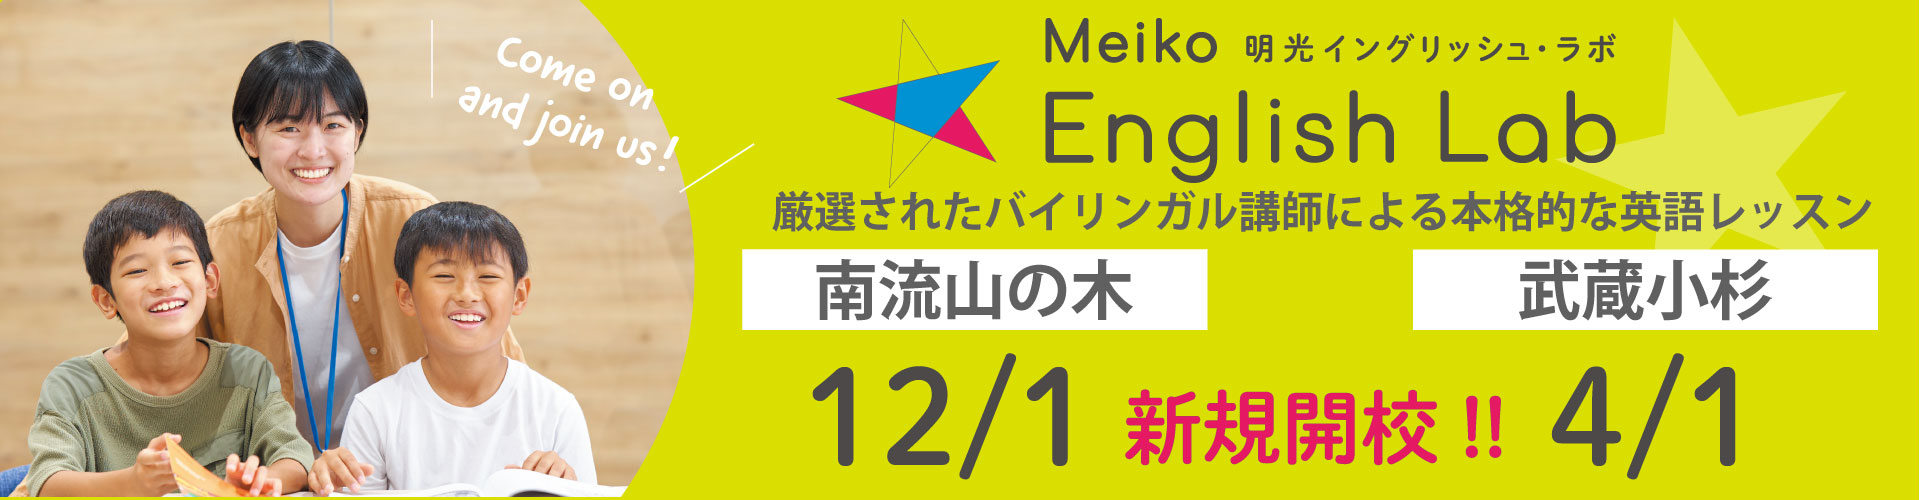 Meiko English Lab新規開校